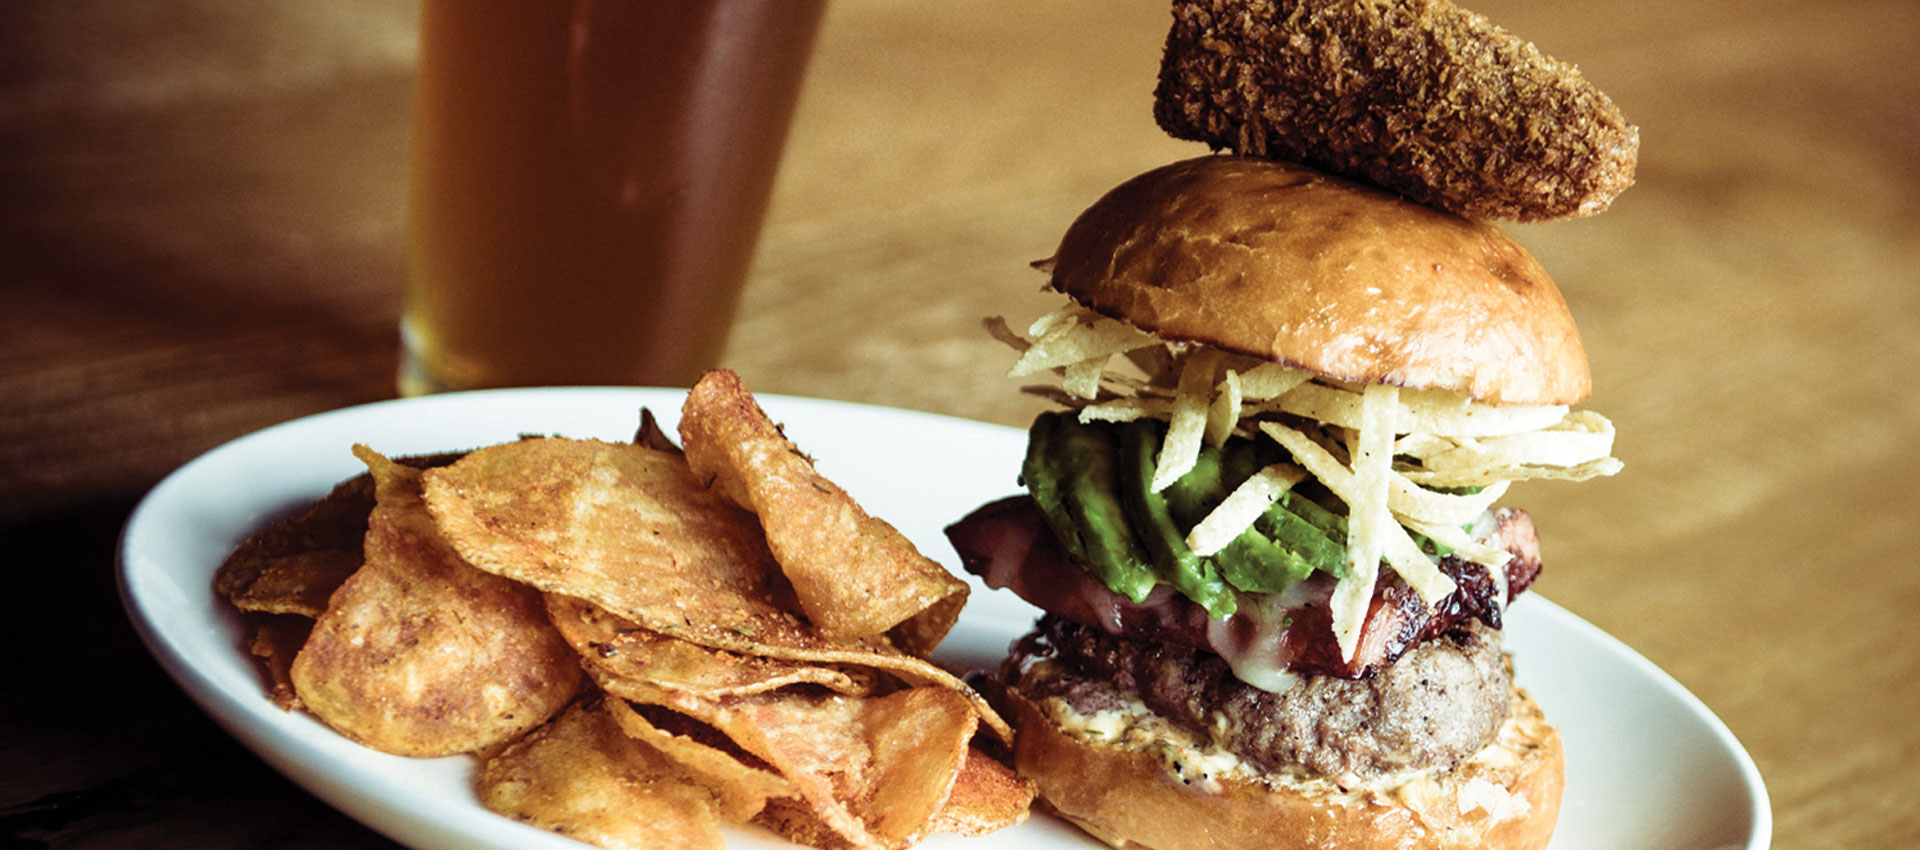 image of burger, chips and beer - dining at Denver Pavilions